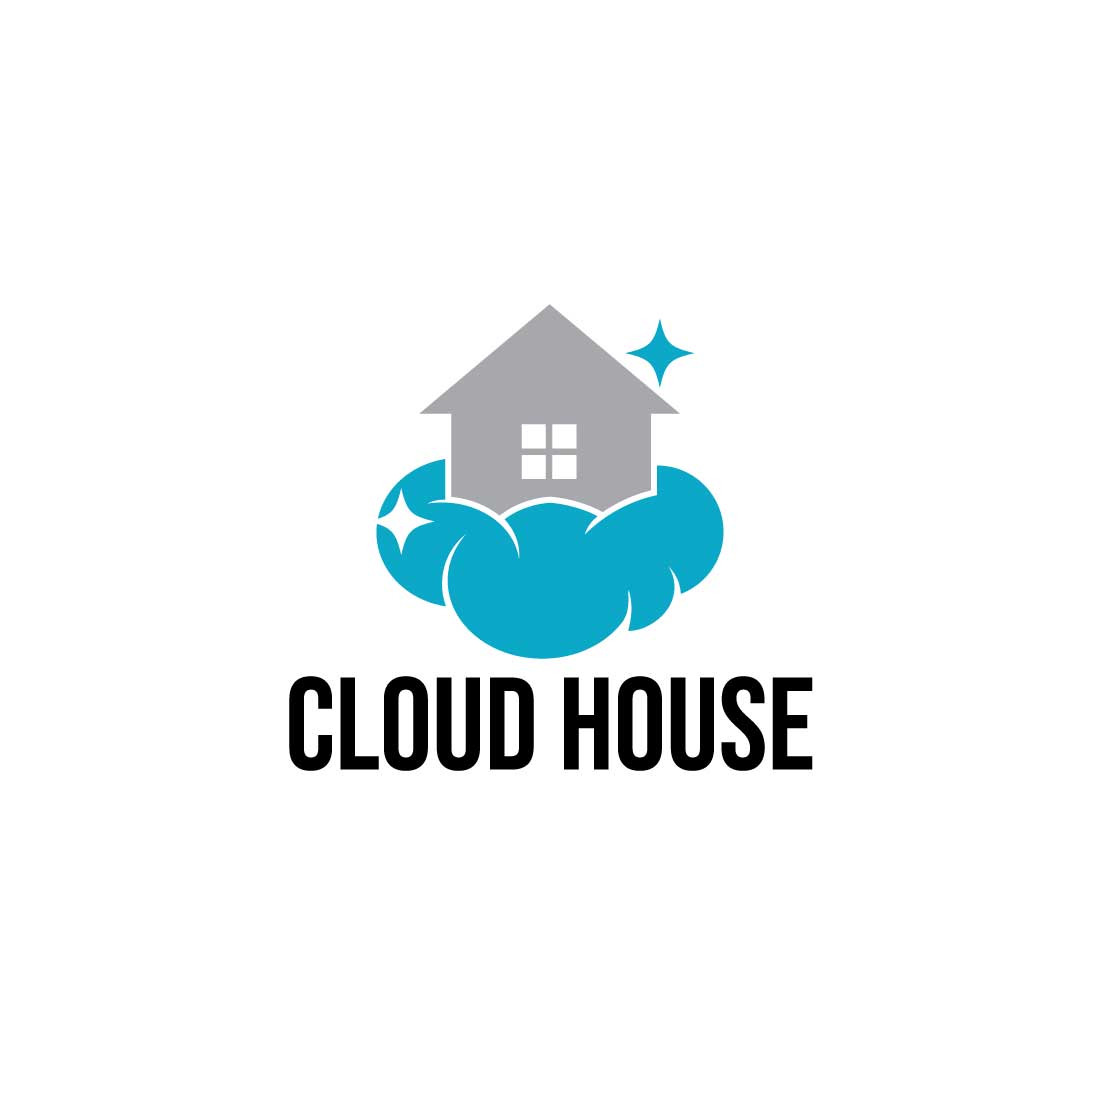 Minimal Flying Cloud House logo design cover image.